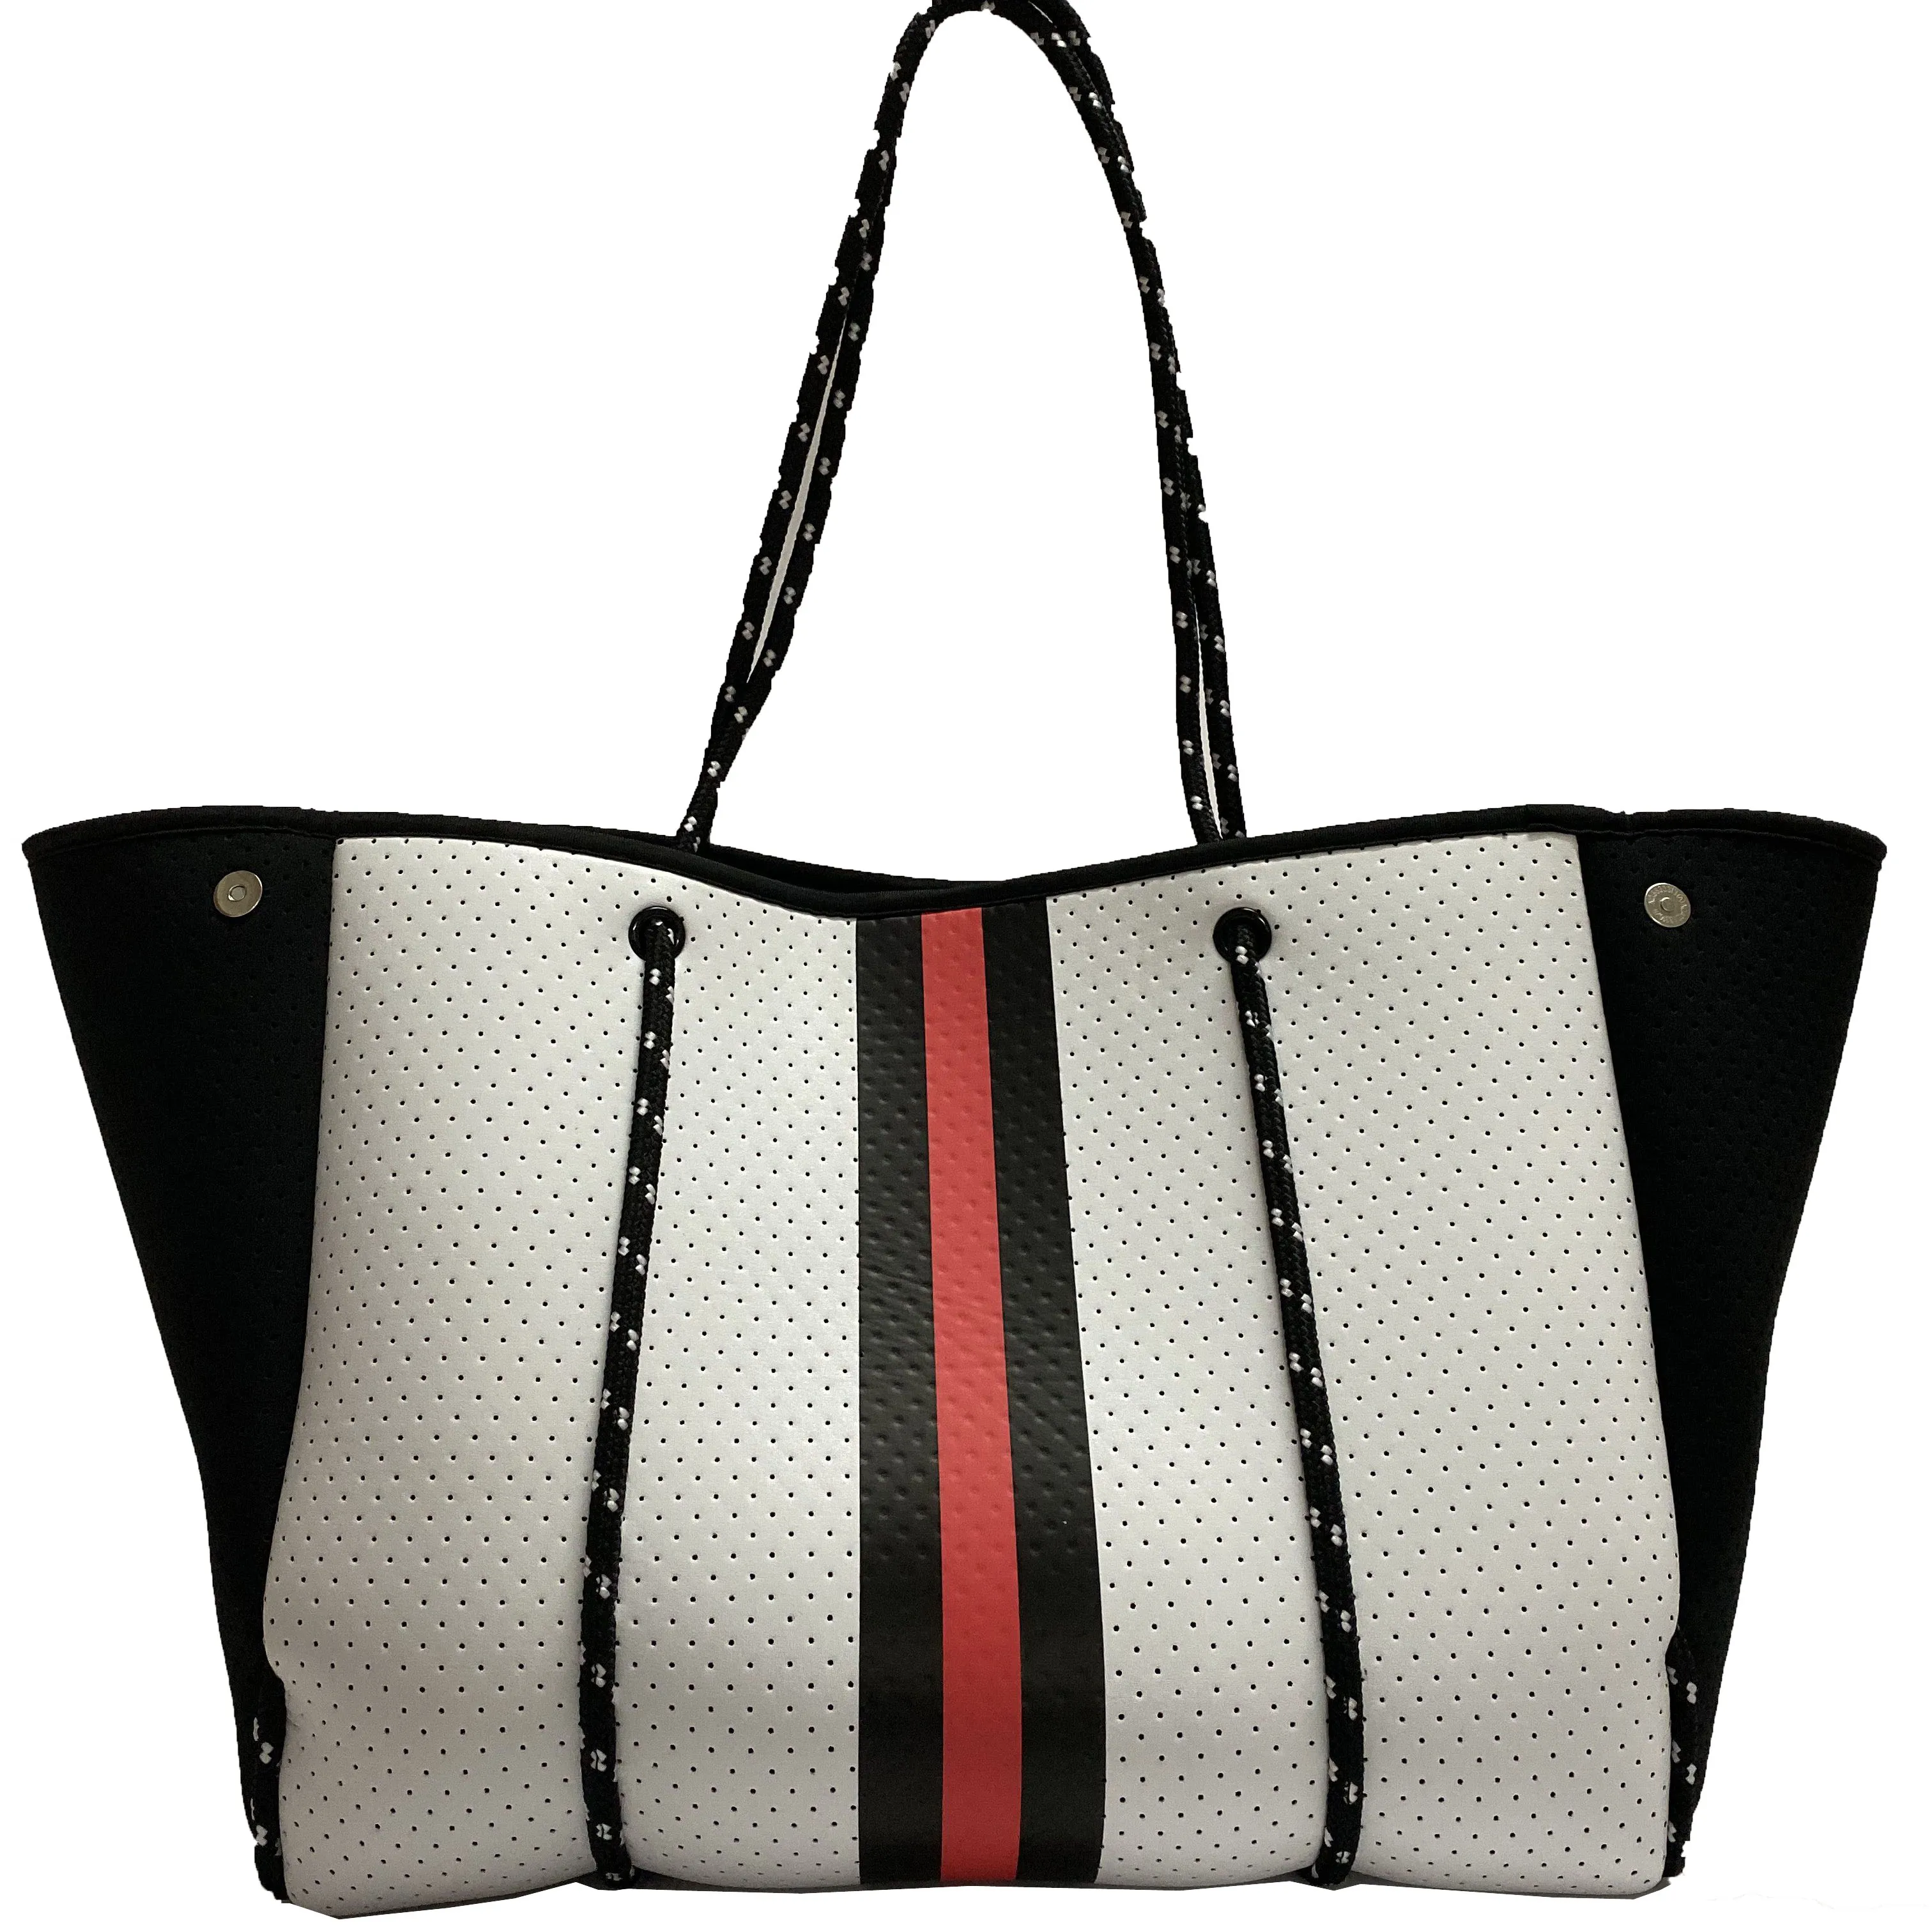 2022 new style perforated neoprene bags women handbags neoprene tote bag